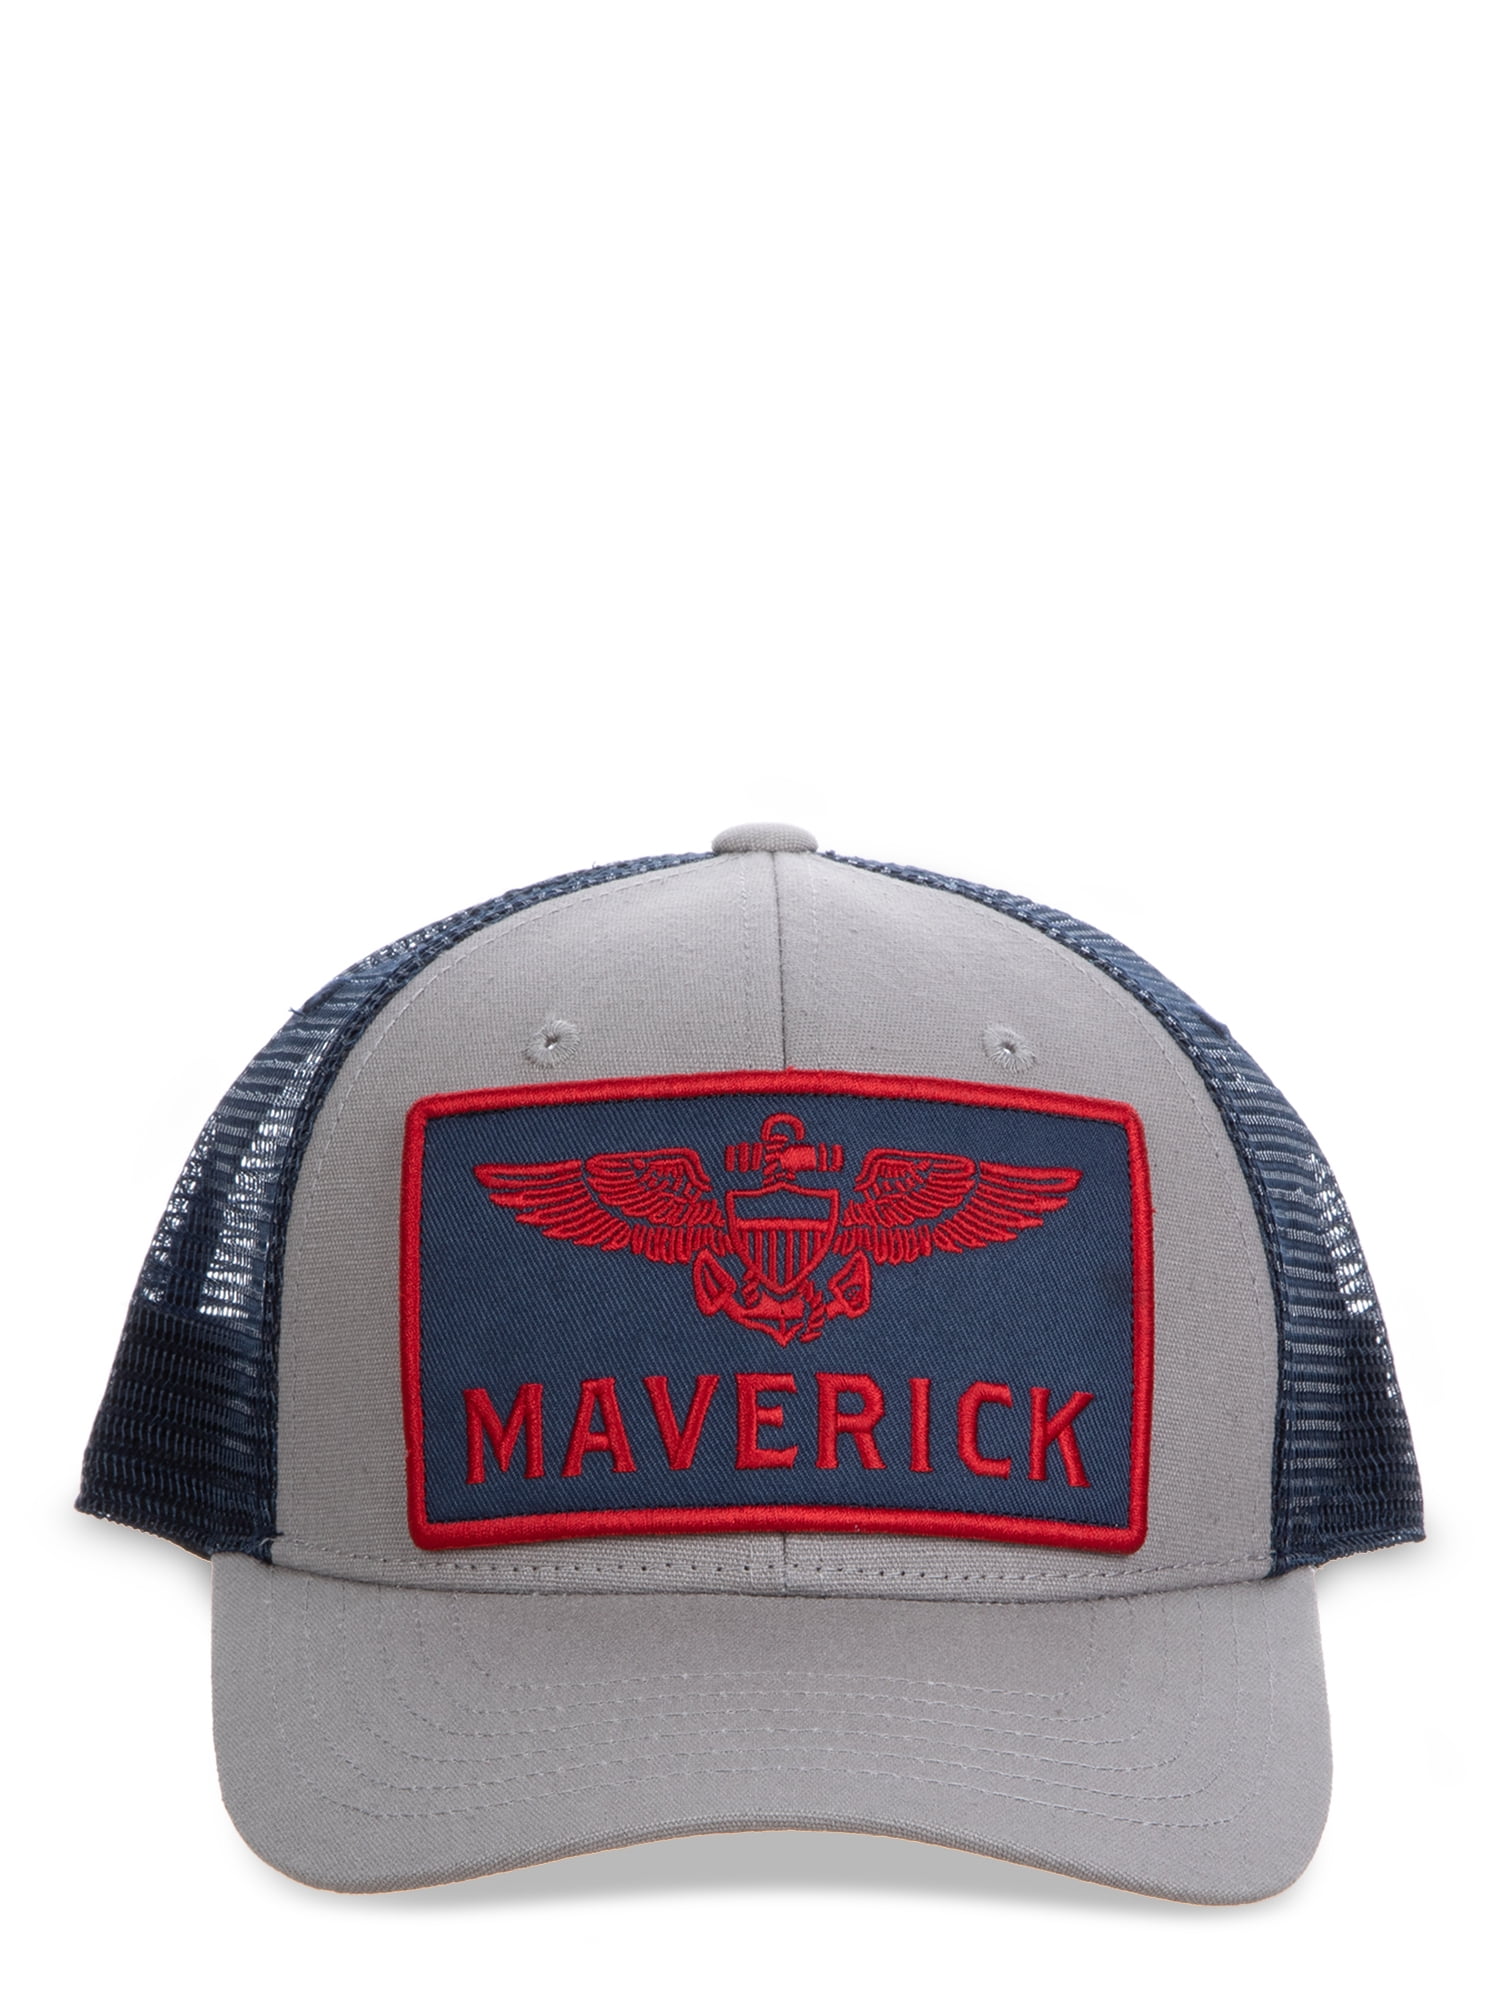 Maverick Top Gun Hat